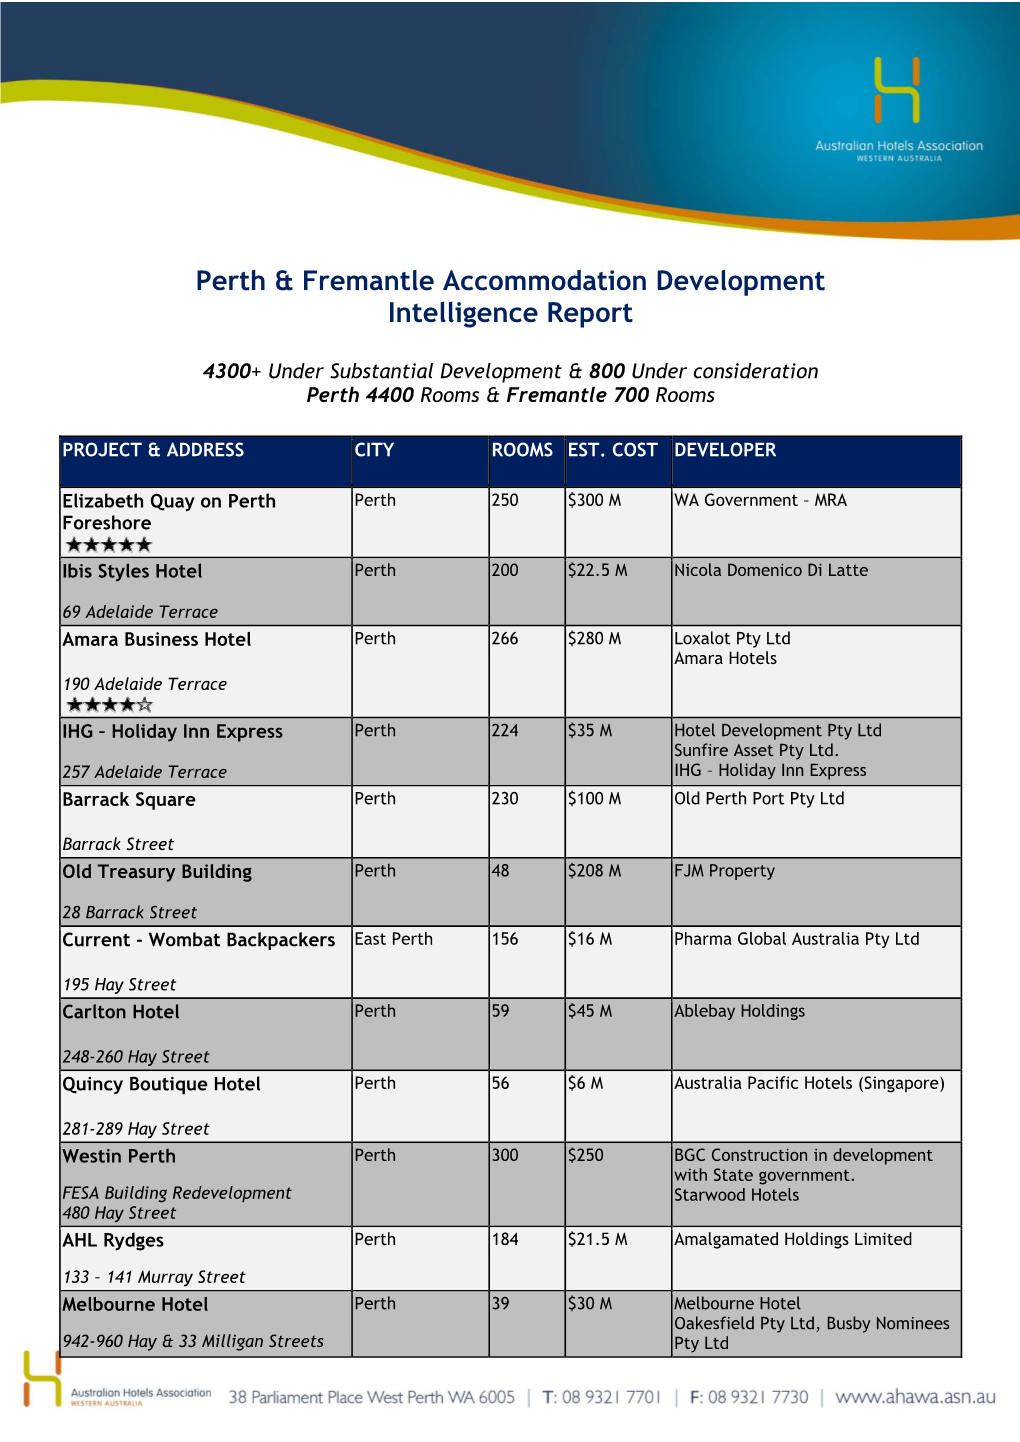 Perth & Fremantle Accommodation Development Intelligence Report